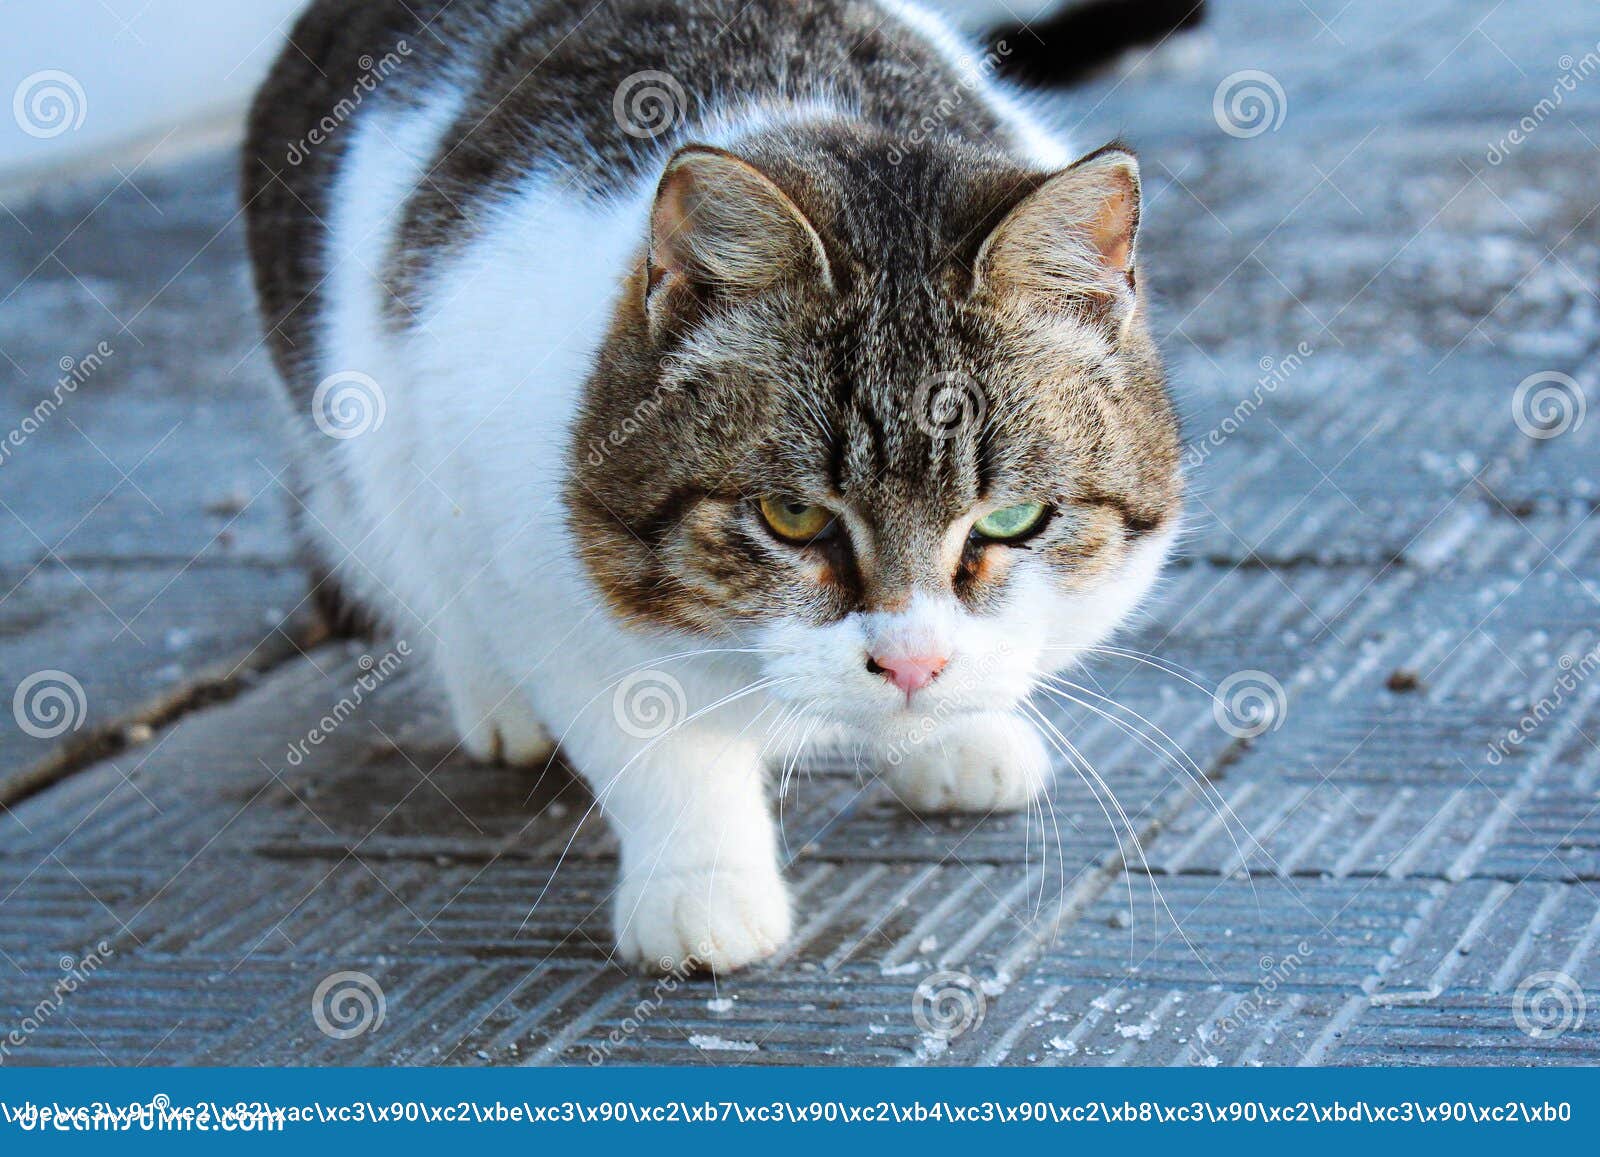 Mismatched cat stock image. Image of multi, wildcat - 216621845